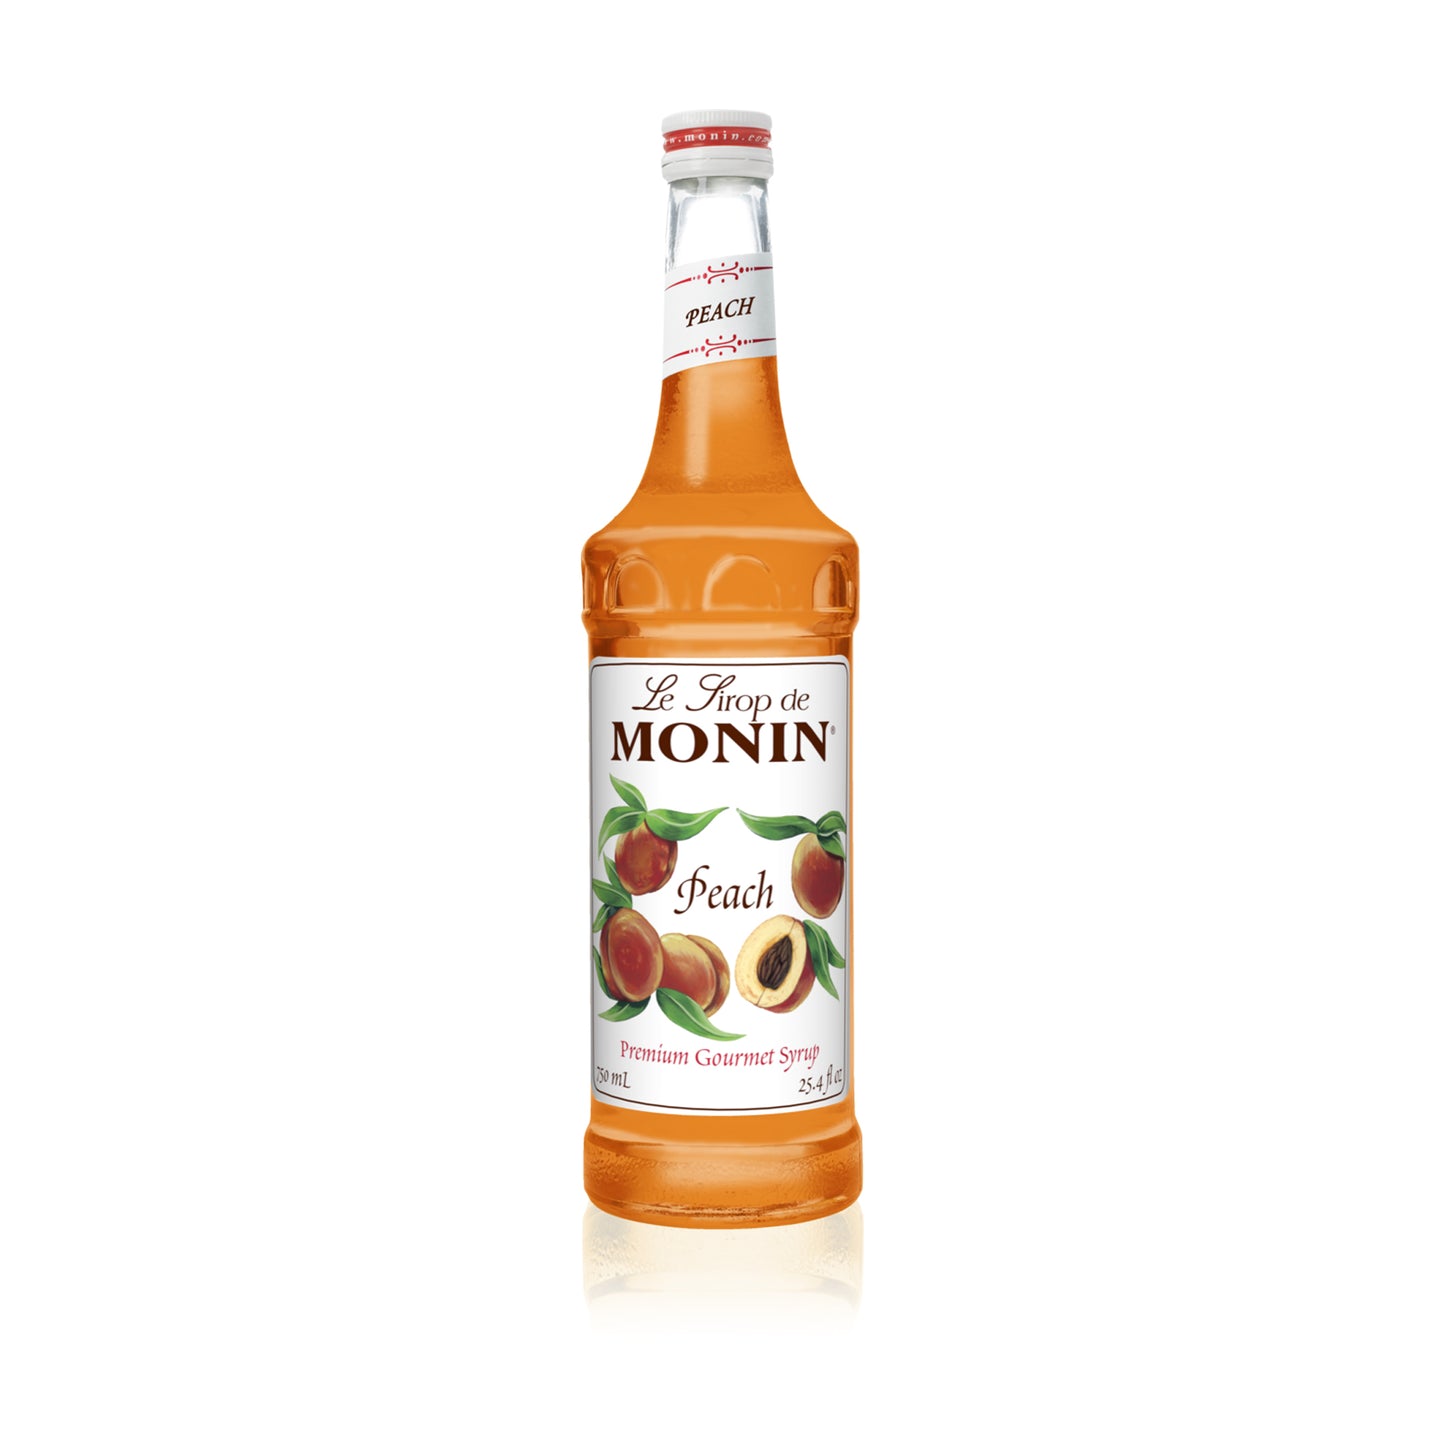 Peach Monin Syrup